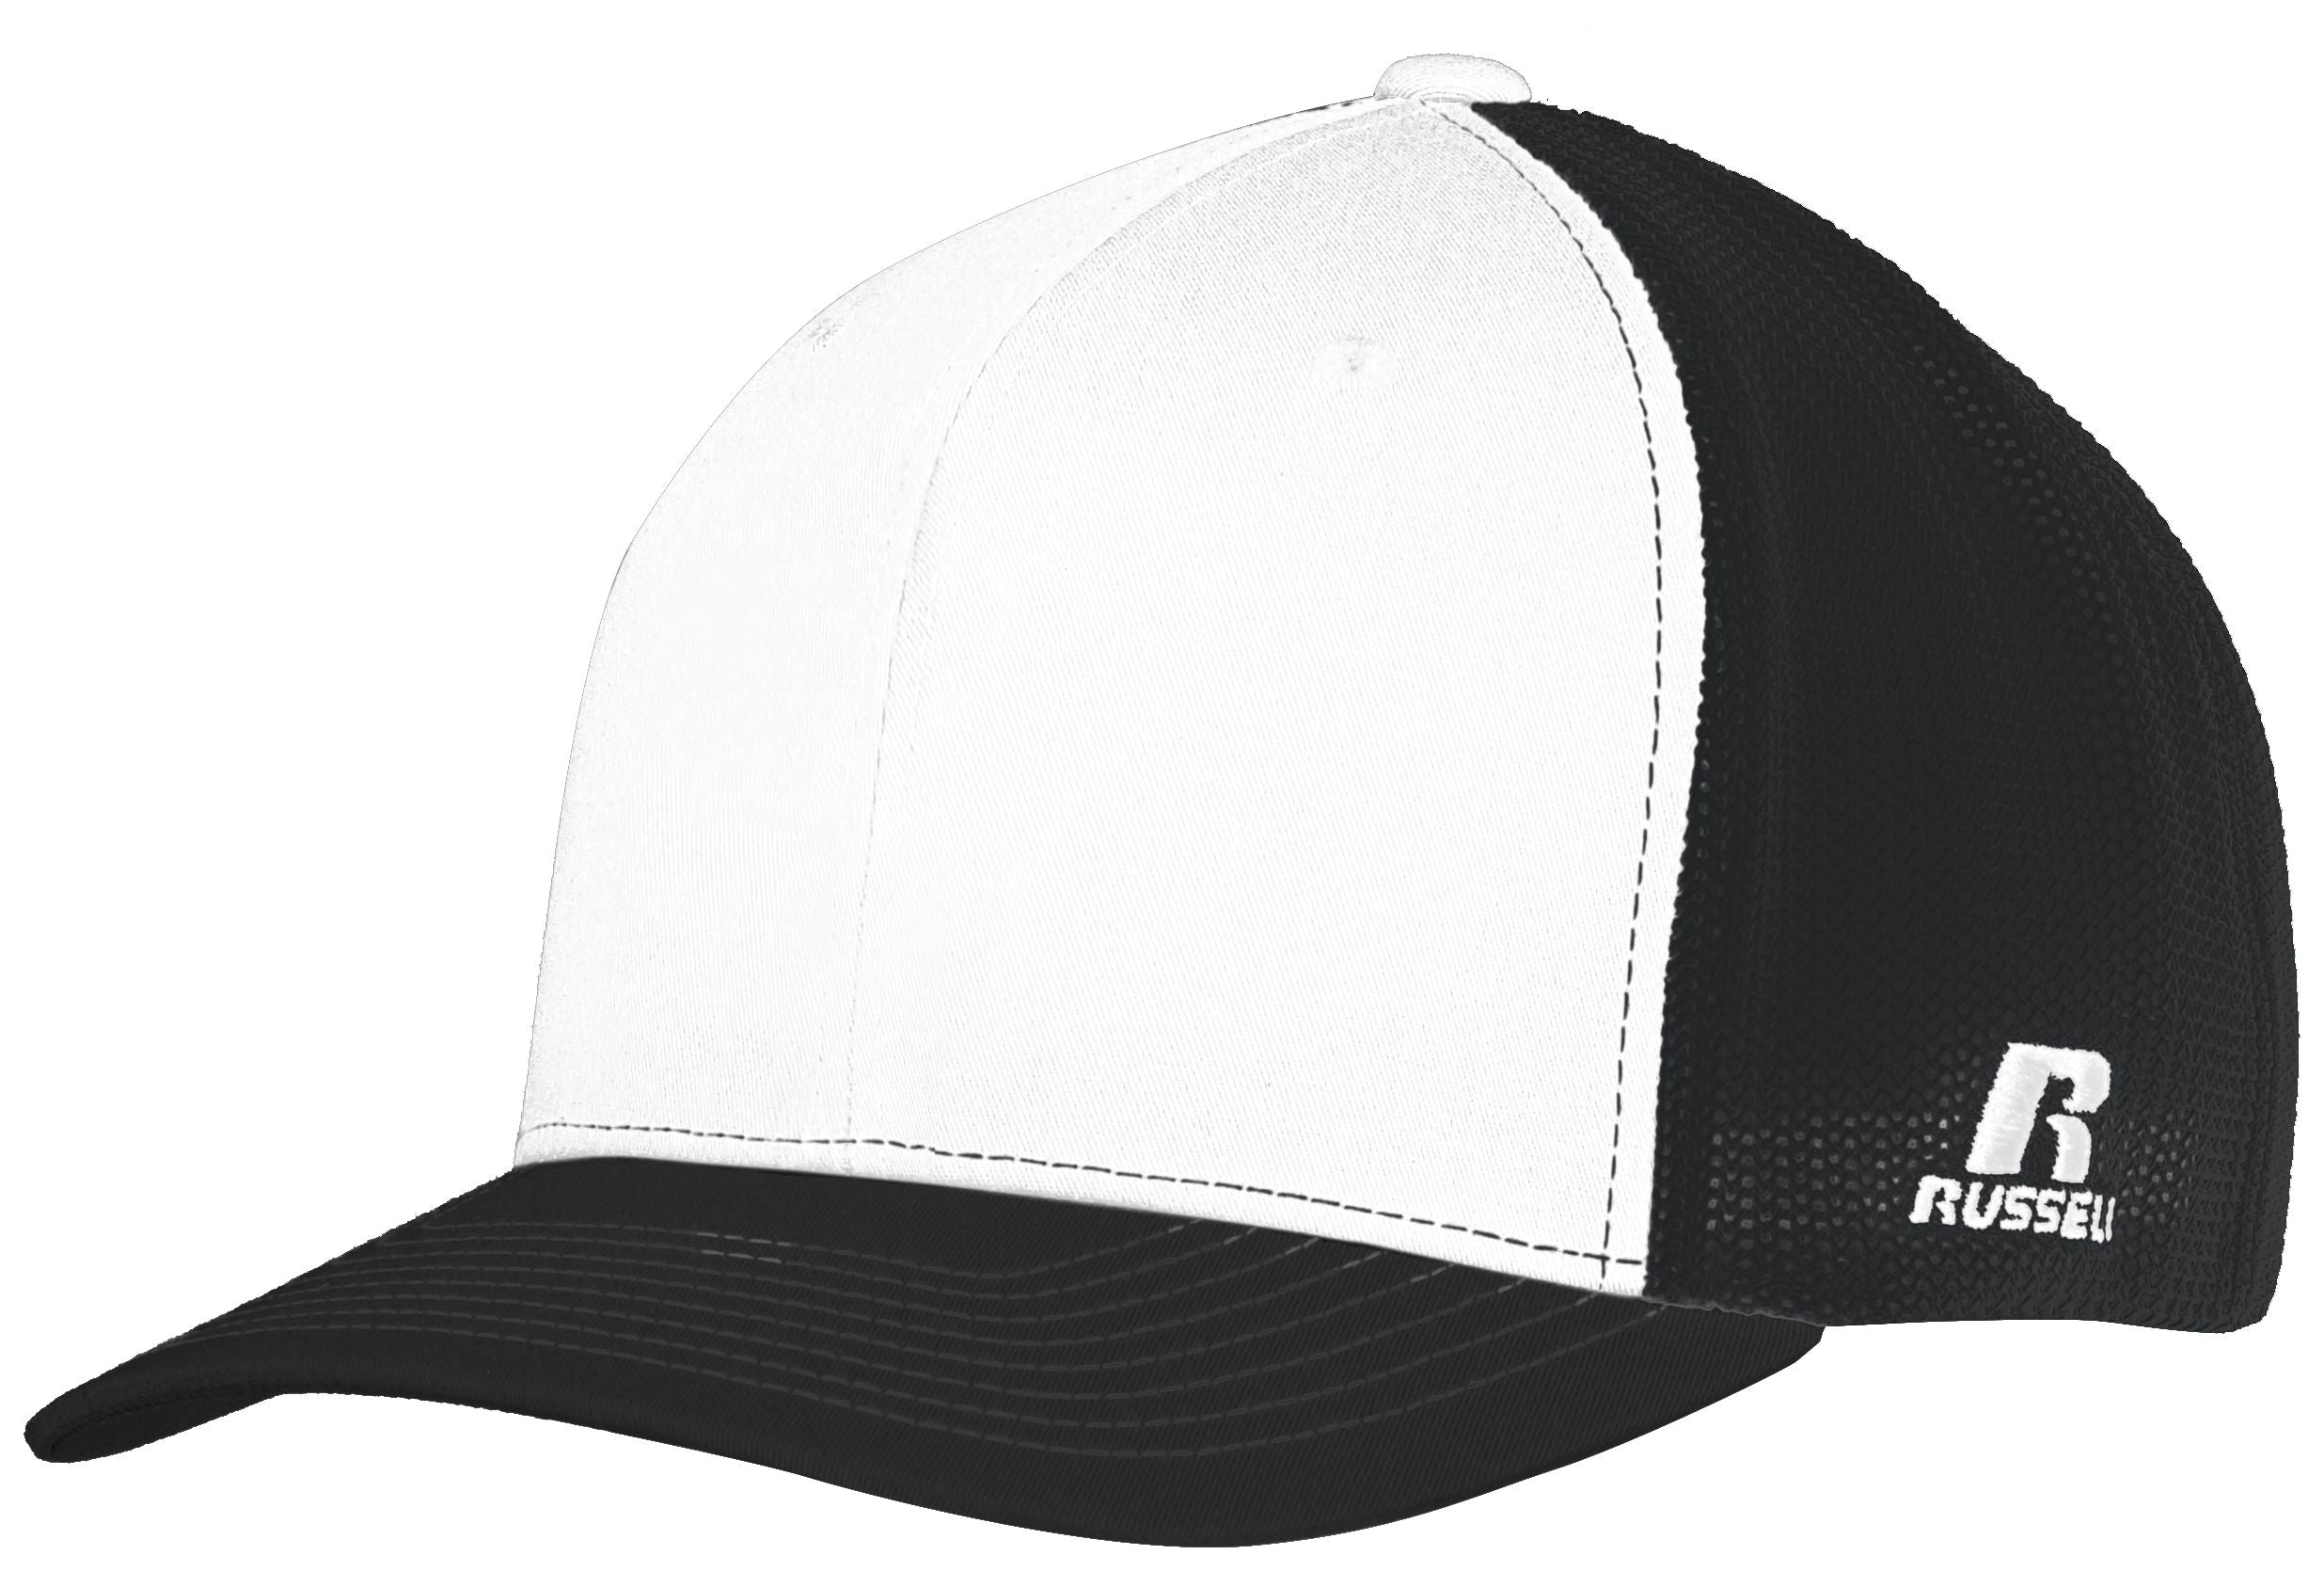 Russell Athletic Flexfit Twill Mesh Cap in White/Black  -Part of the Adult, Headwear, Headwear-Cap, Russell-Athletic-Products product lines at KanaleyCreations.com